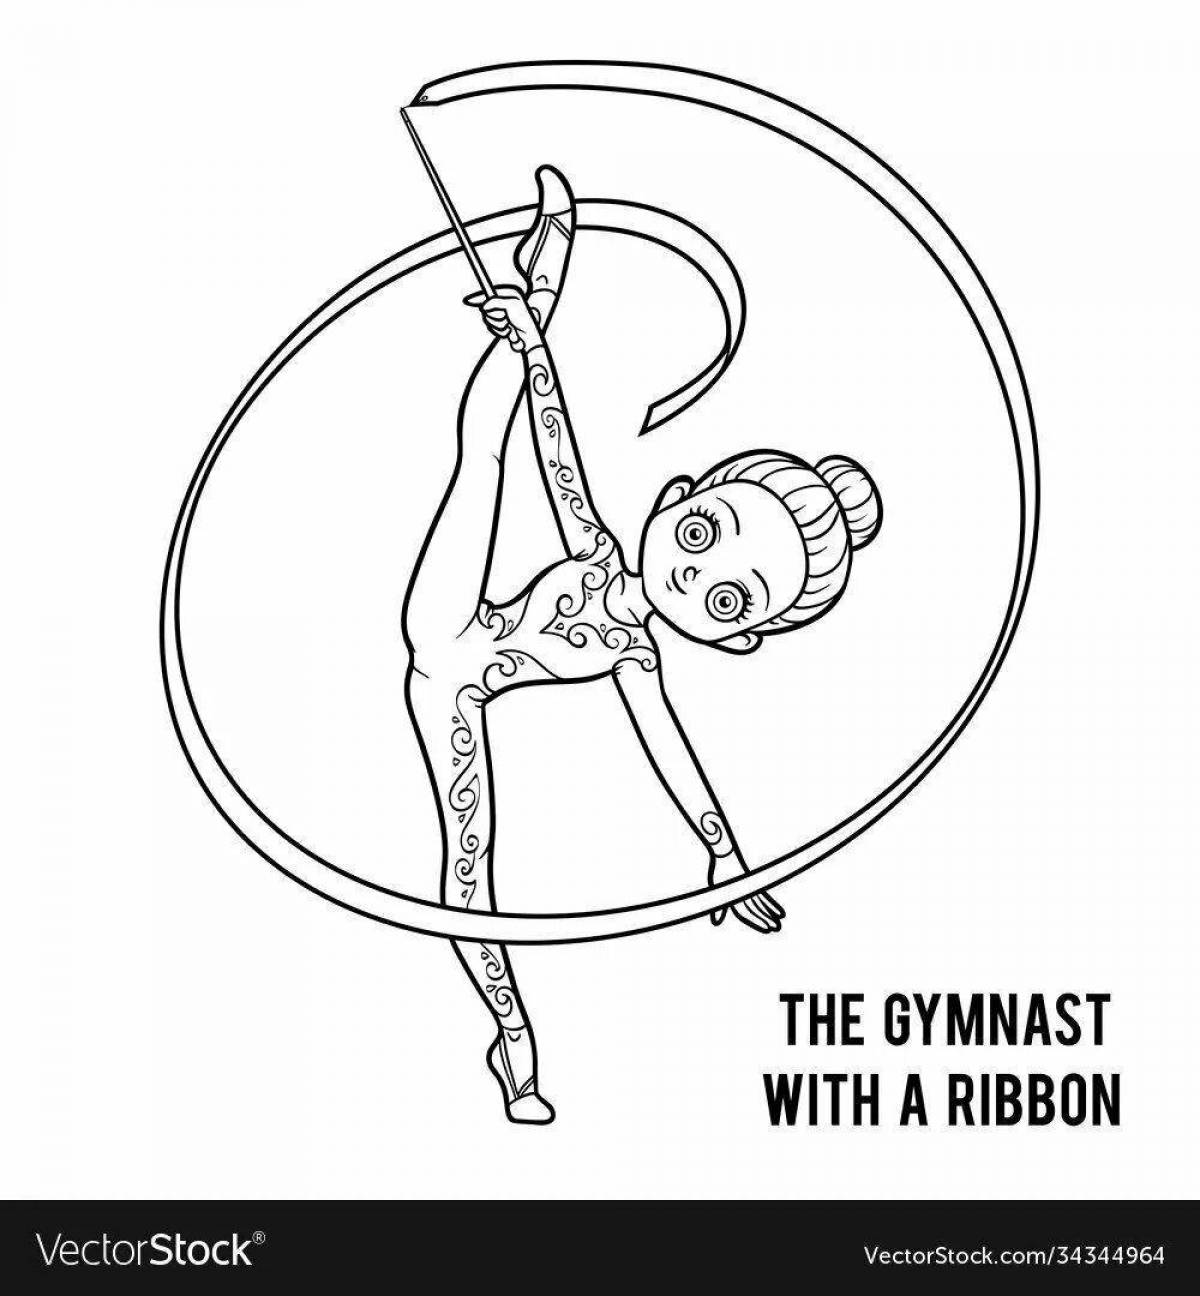 An elegant gymnast with a hoop